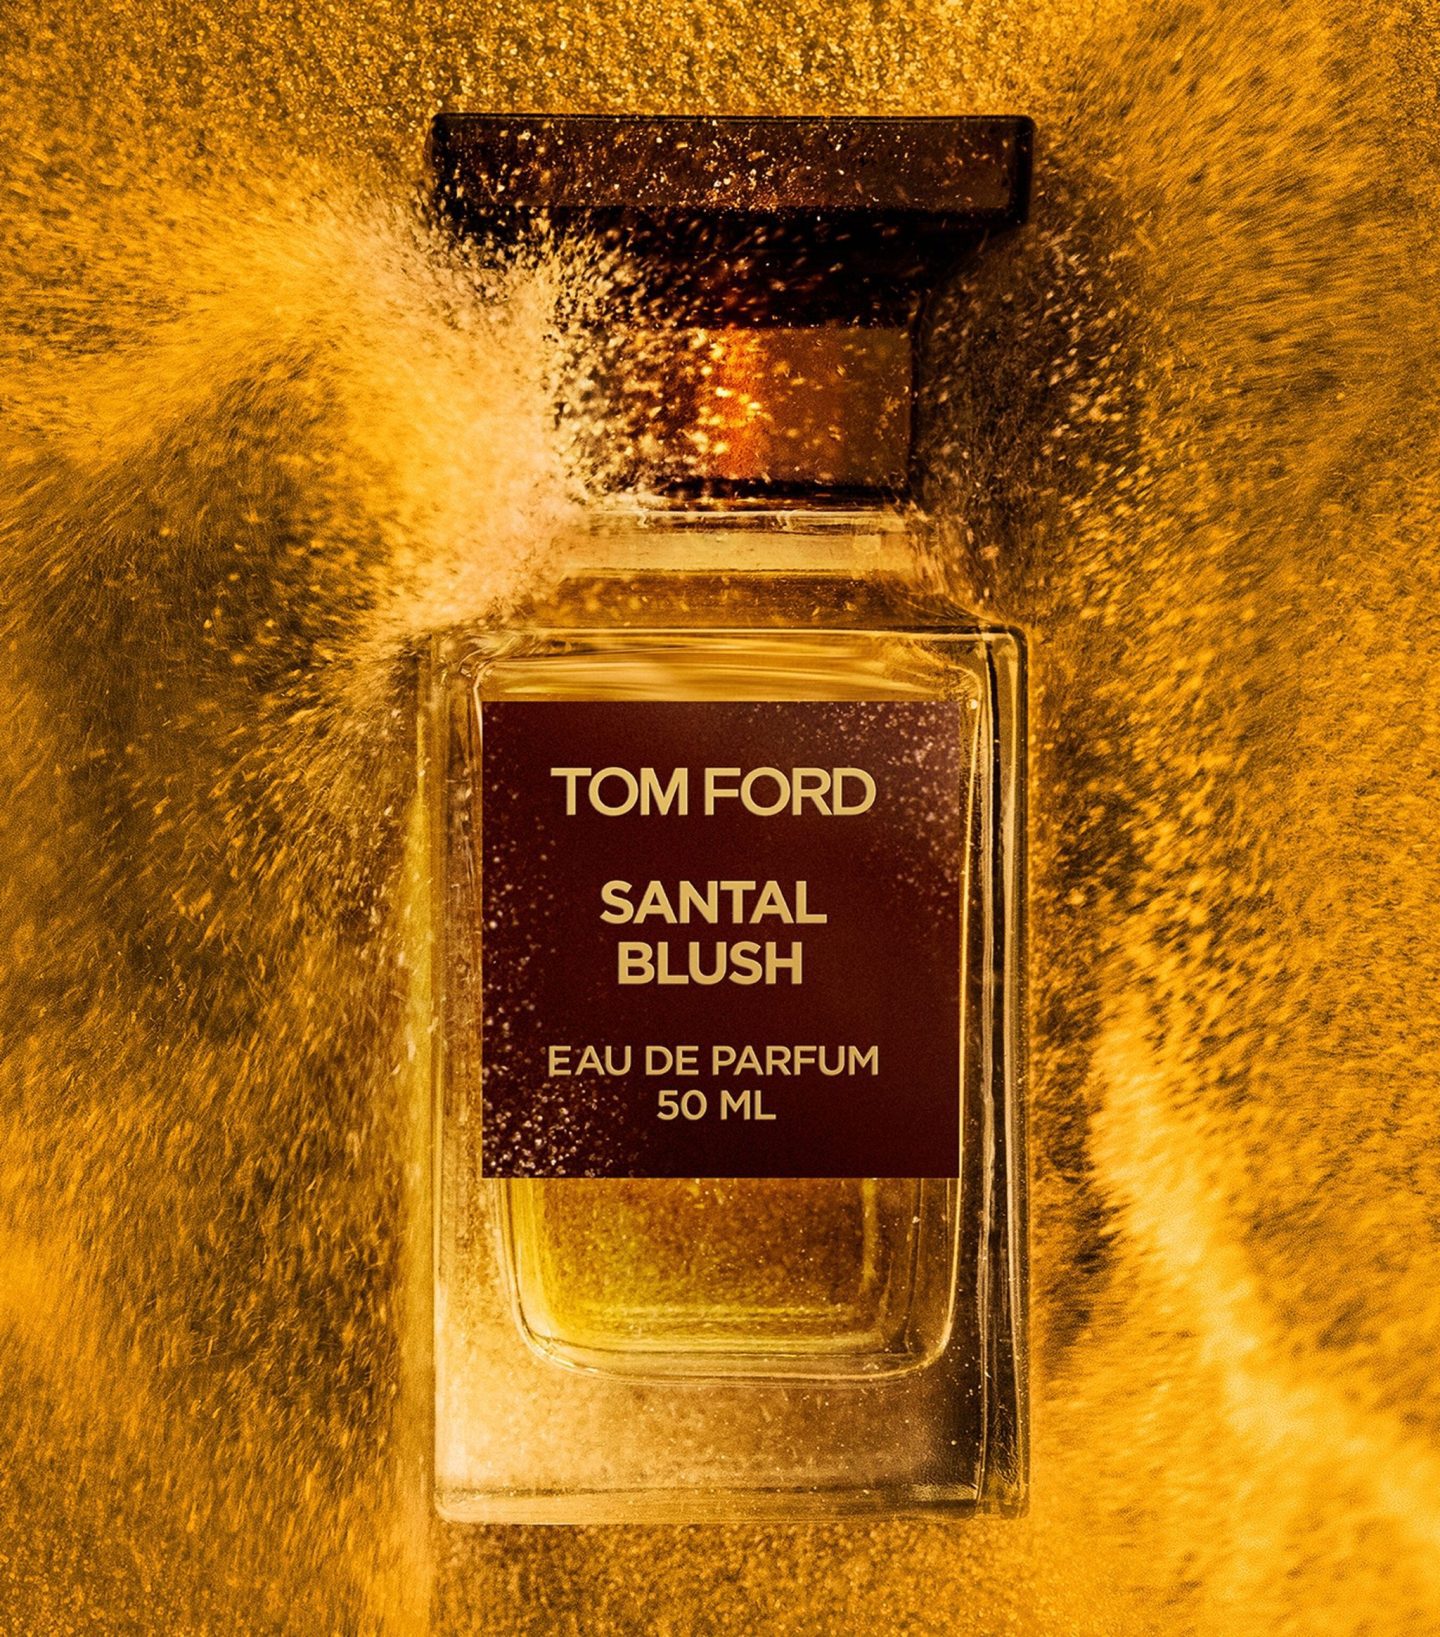 Tom Ford Santal Blush
Best Sandalwood Fragrances